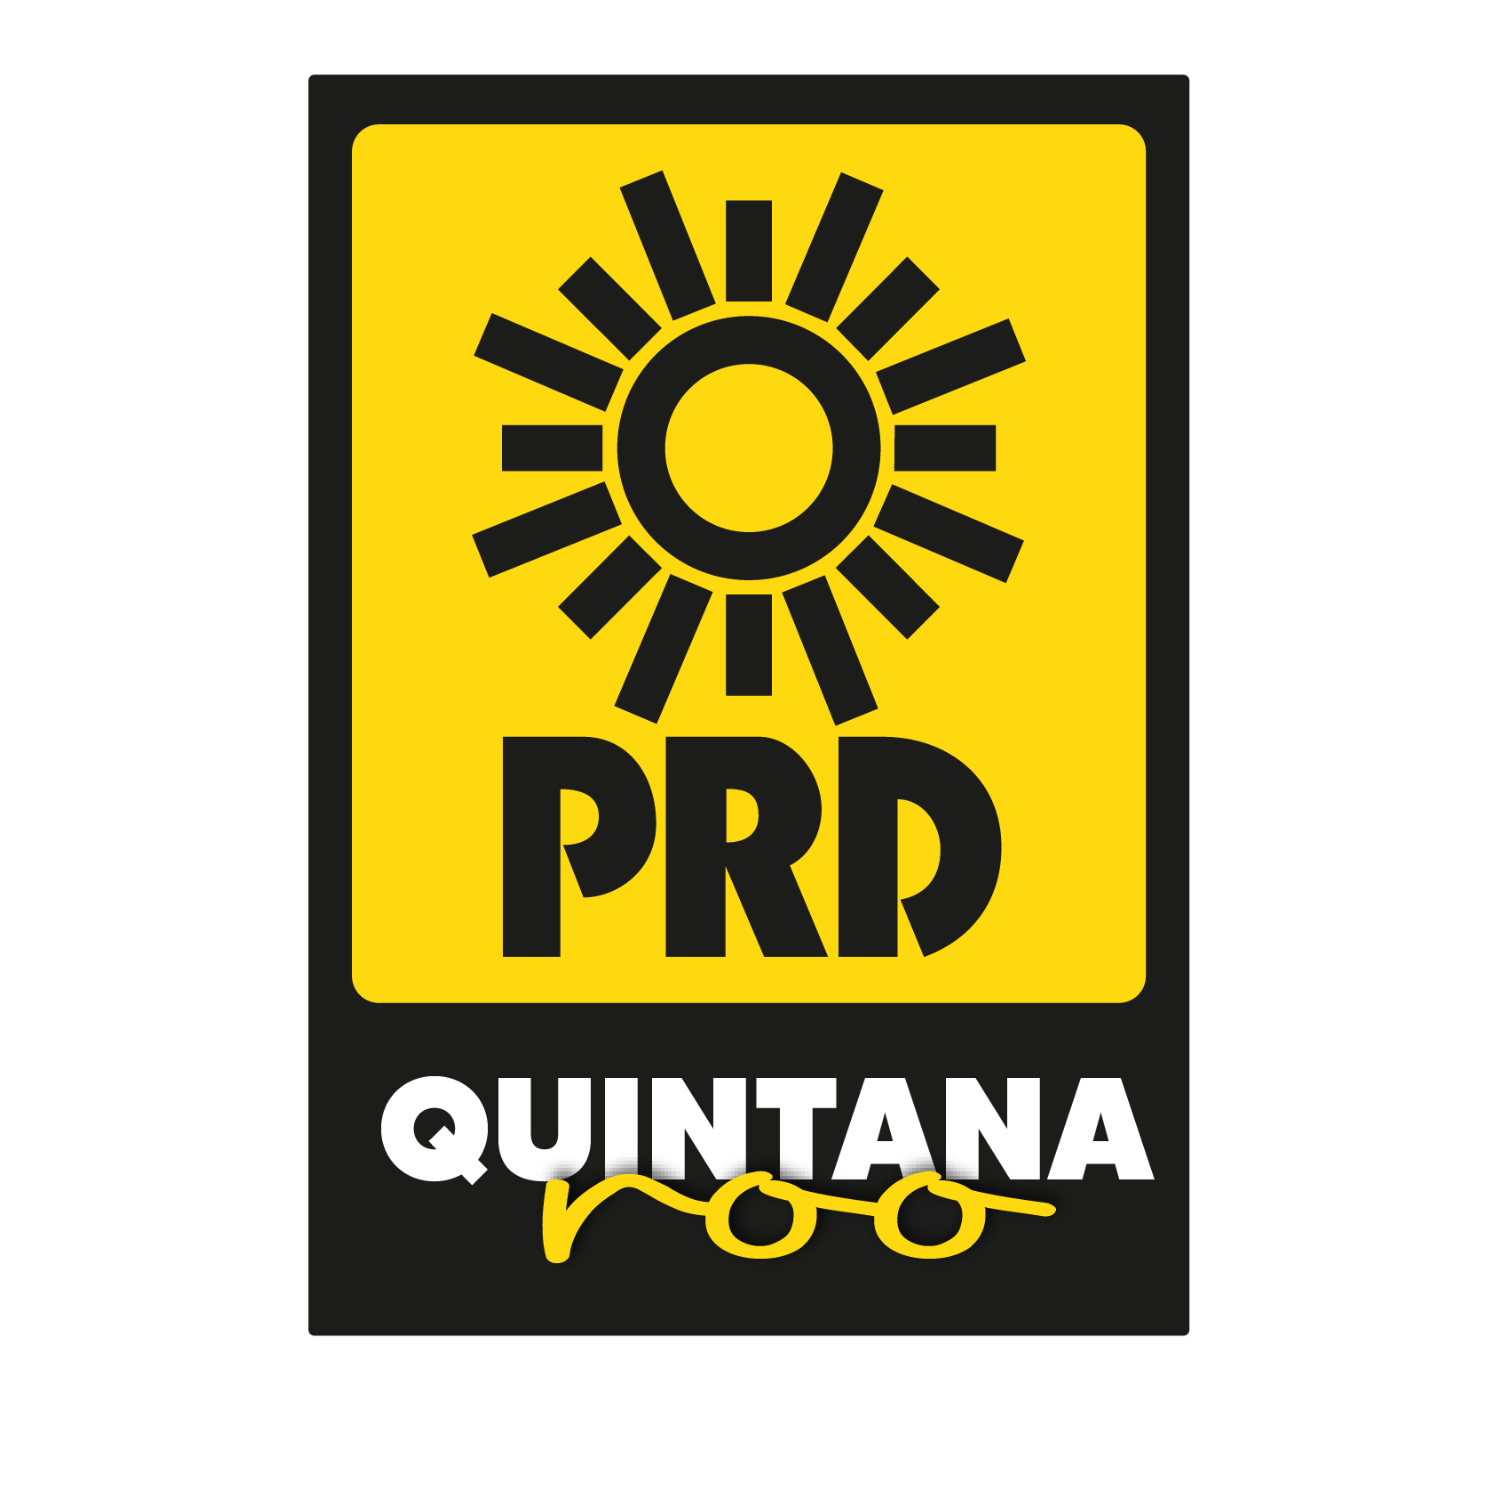 PRD Quintana Roo